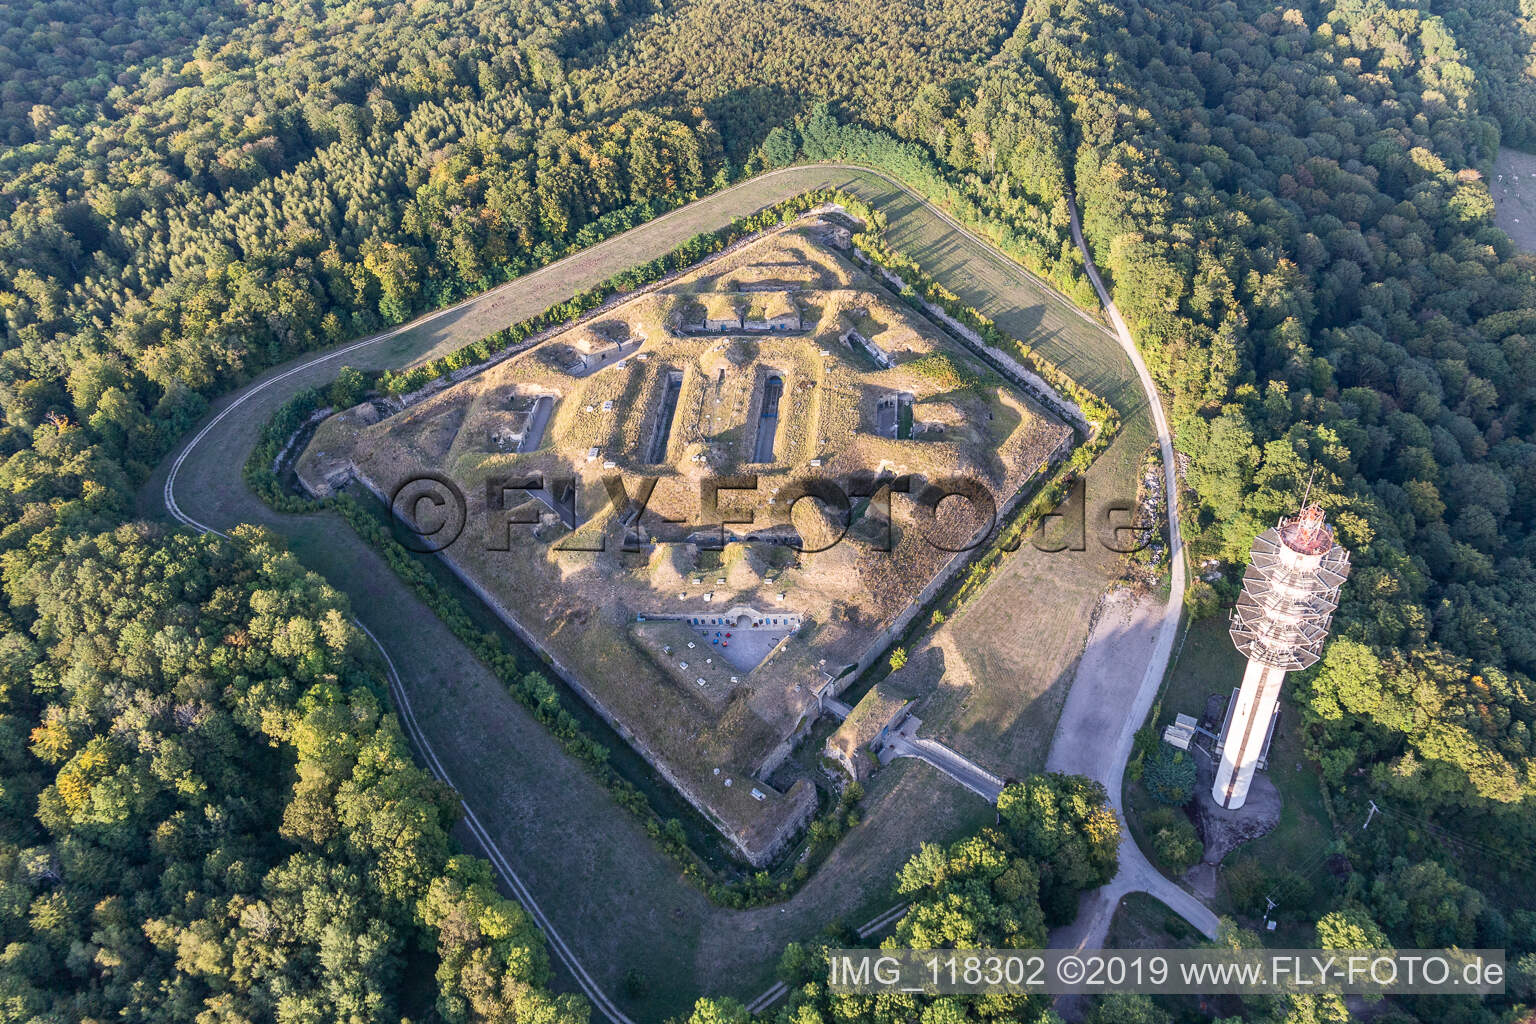 Luftaufnahme von Fragmente der Zitadelle- Festungsanlage " Fort de Bourlémont " an der Allée de Rivières in Mont-les-Neufchateau in Grand Est in Mont-lès-Neufchâteau im Bundesland Vosges, Frankreich